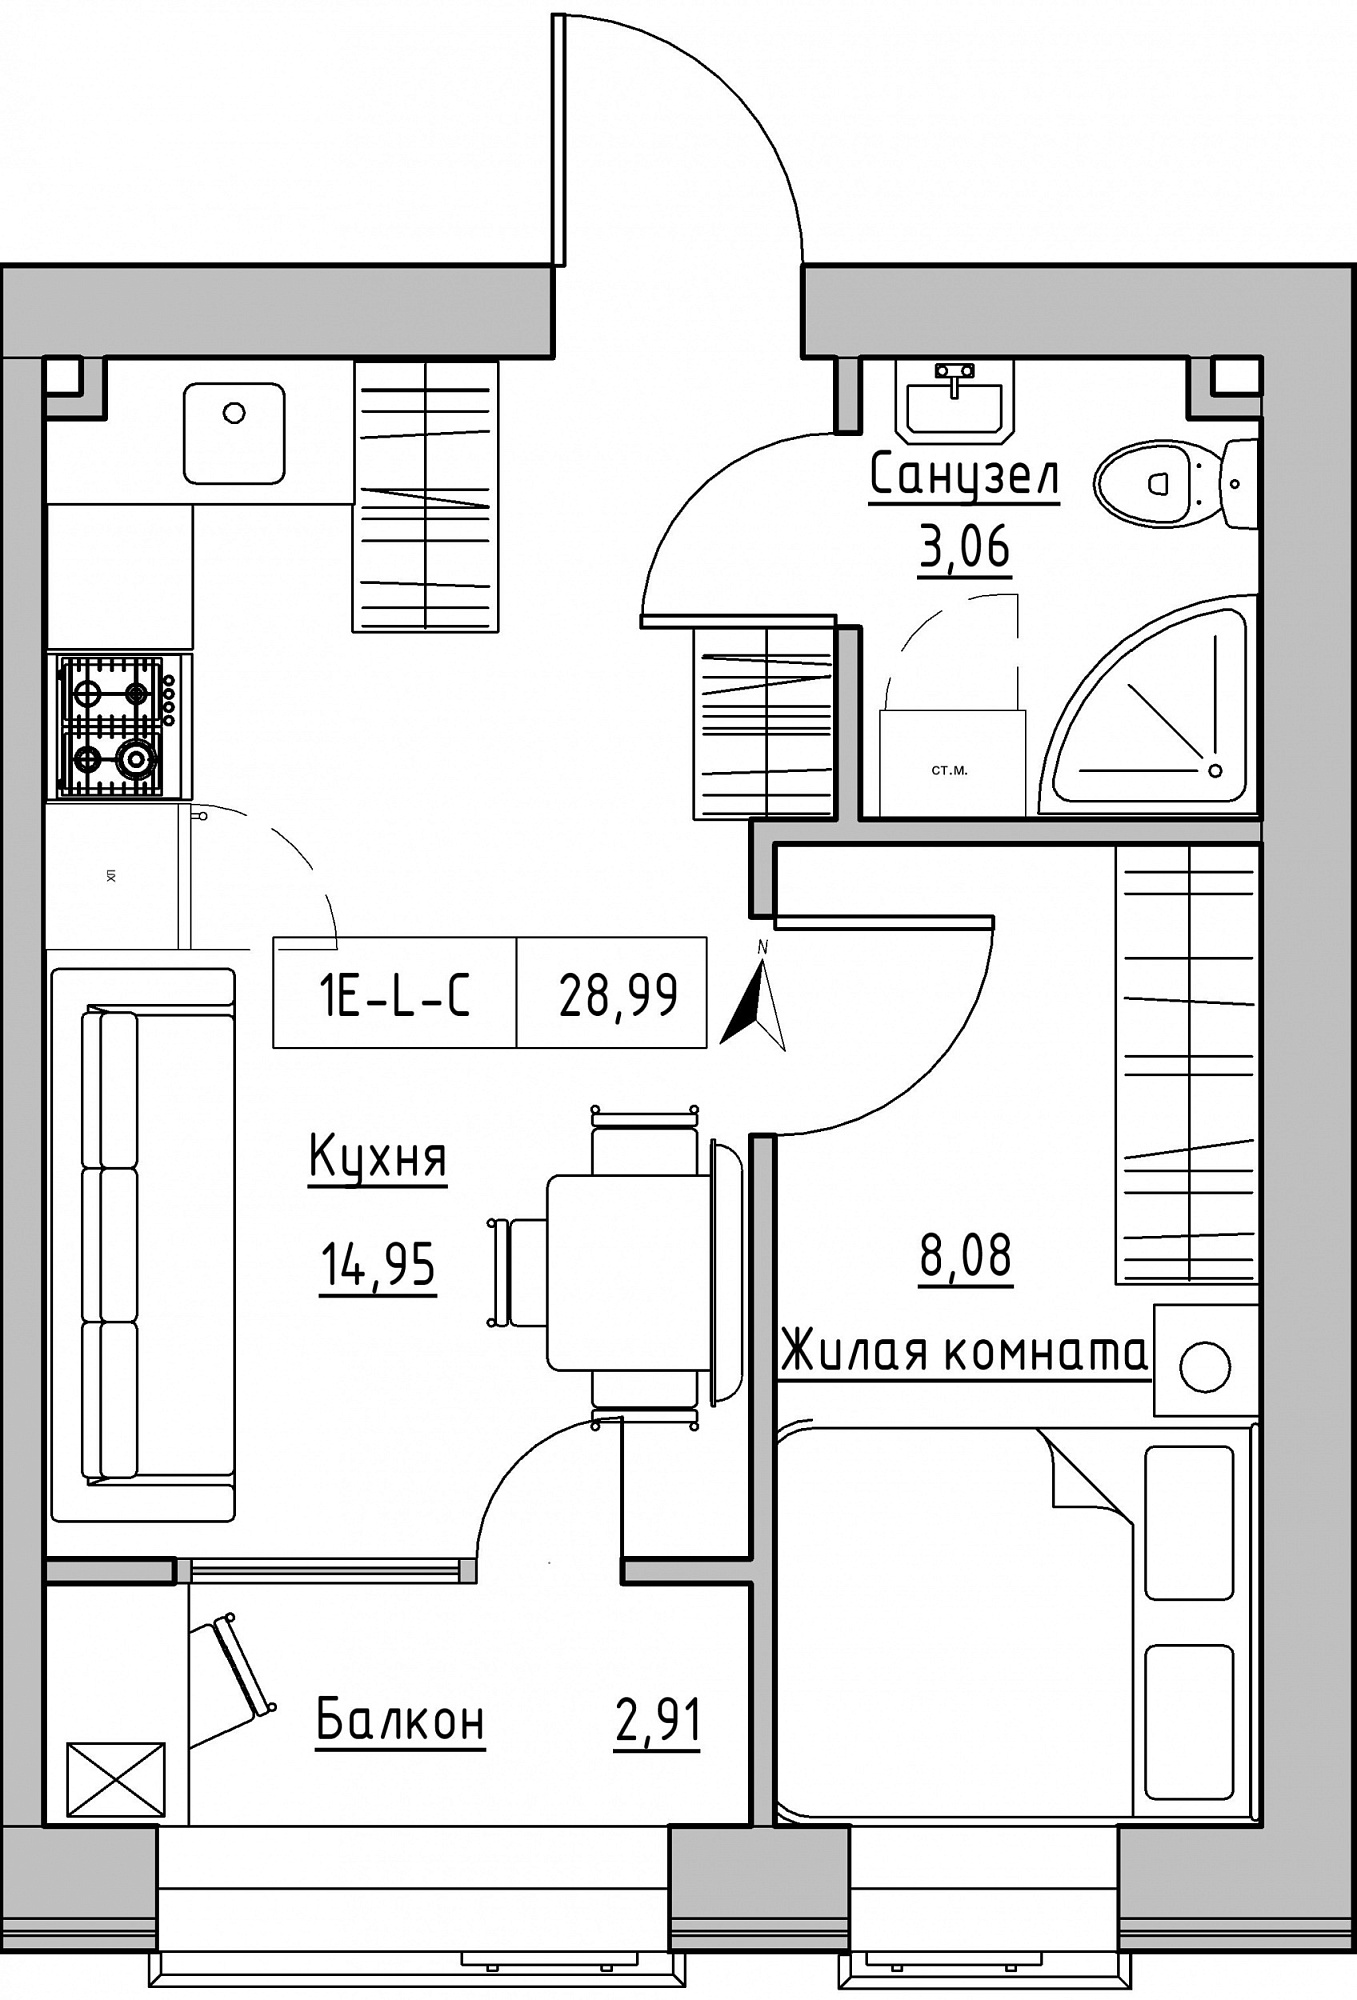 Planning 1-rm flats area 28.99m2, KS-019-03/0009.